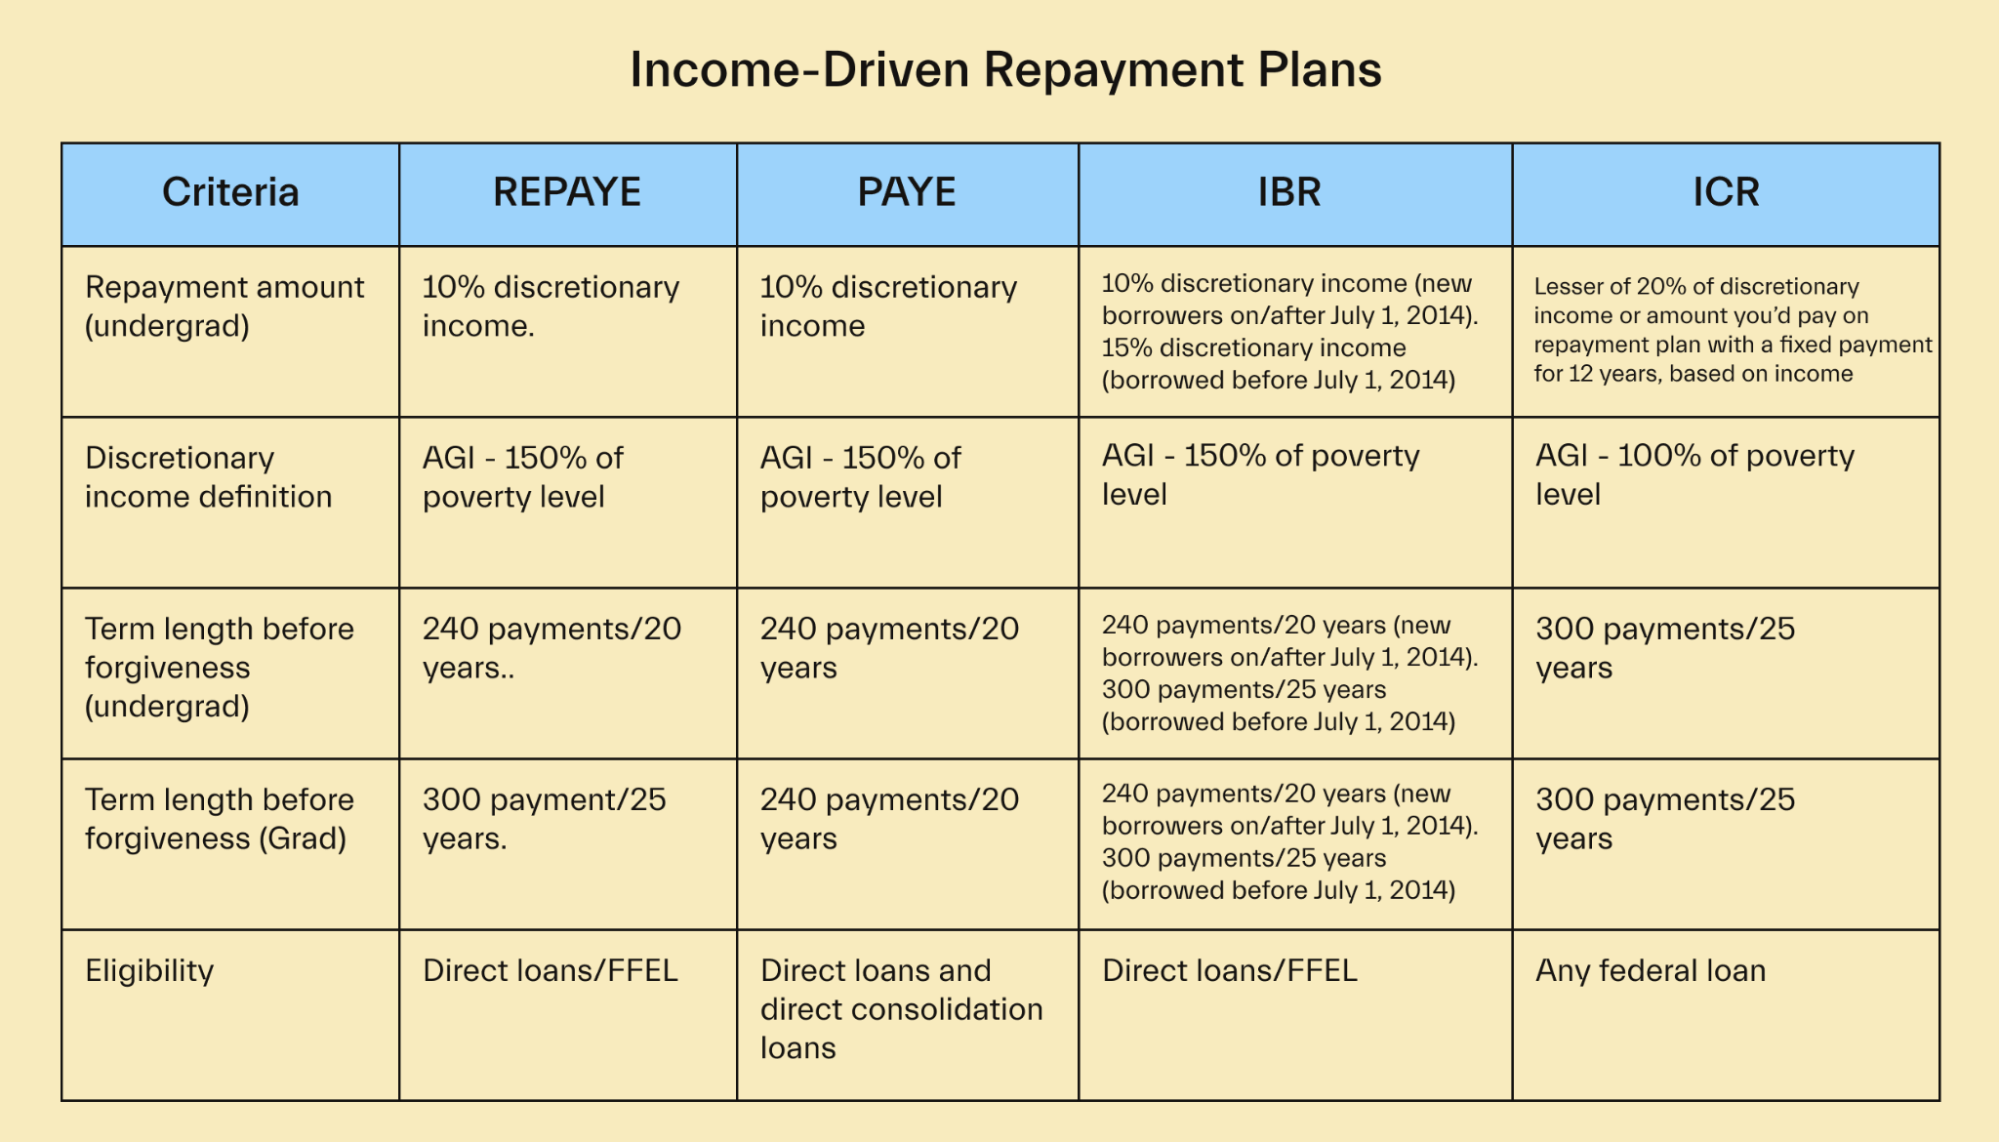 Income-Driven Repayment Plans